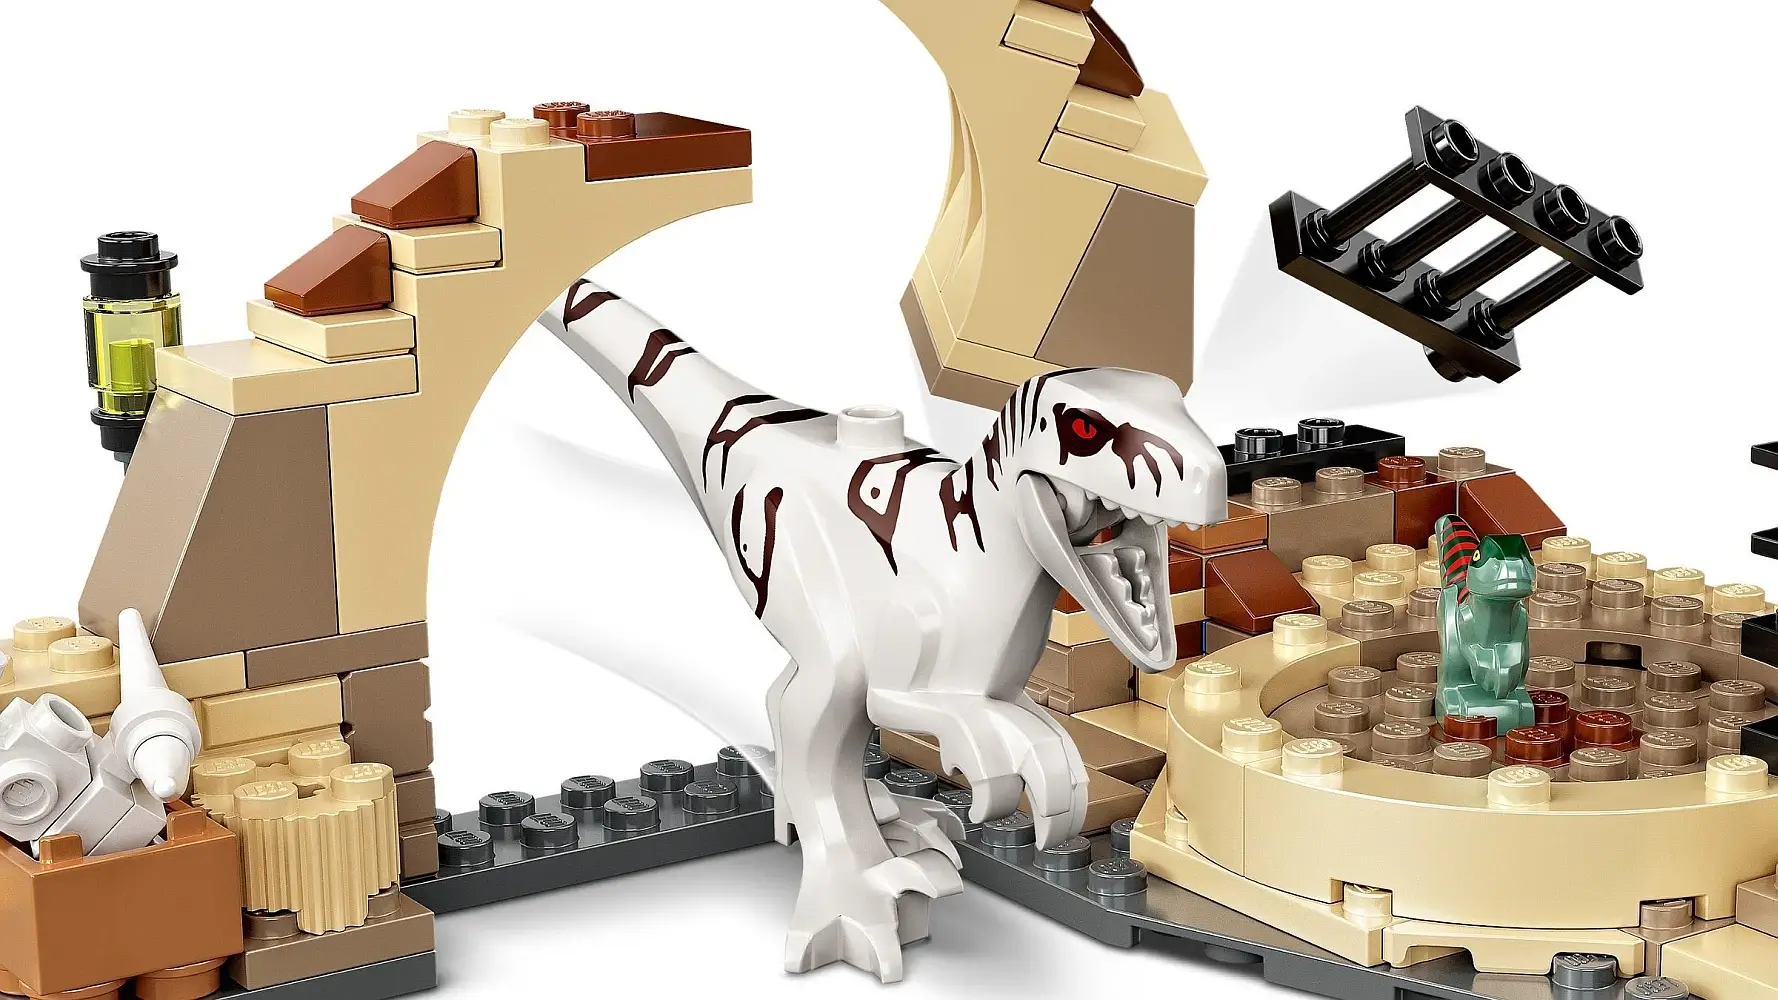 Dinozaur Atrociraptor z serii LEGO® Jurassic World™